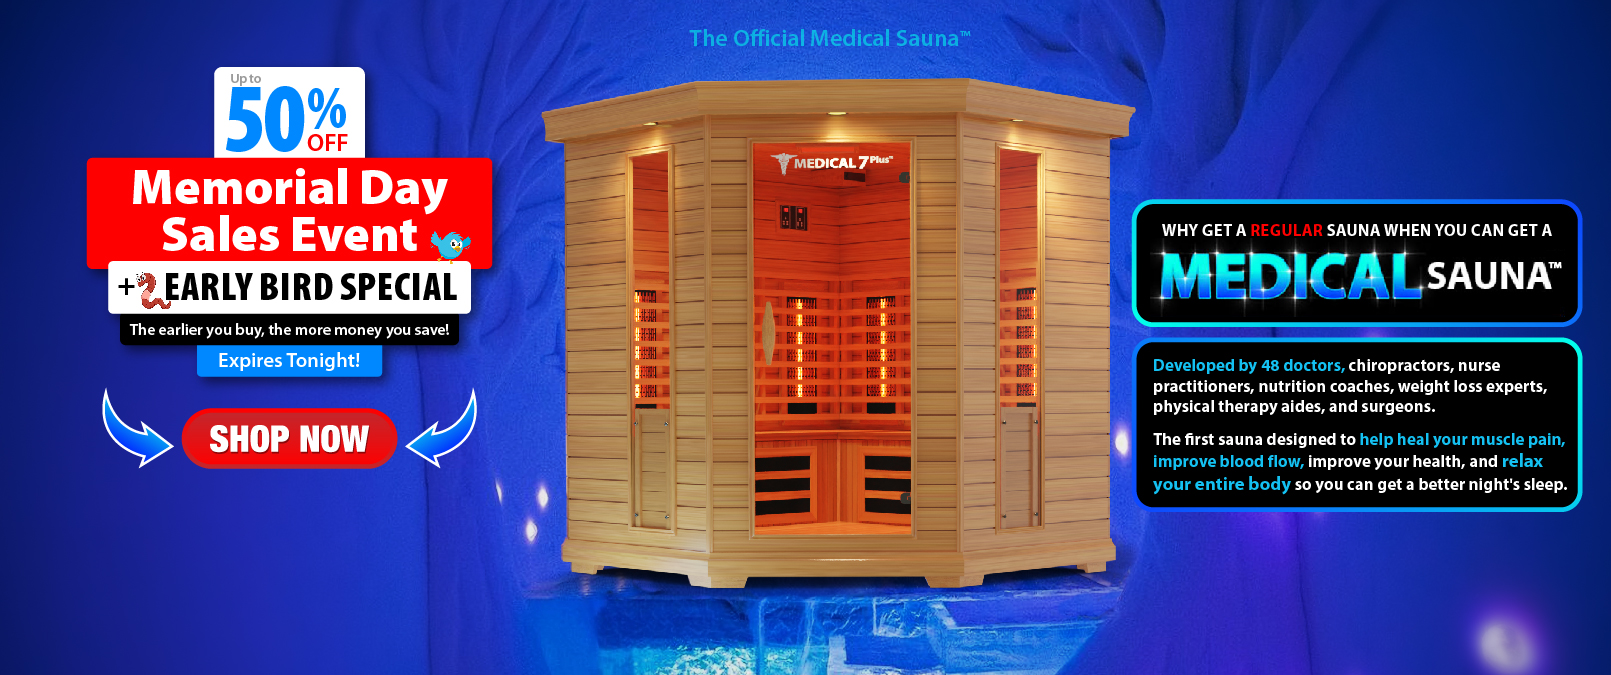 Medical Health Sauna - Buy Now From Sauna Specialists | Medical Saunas